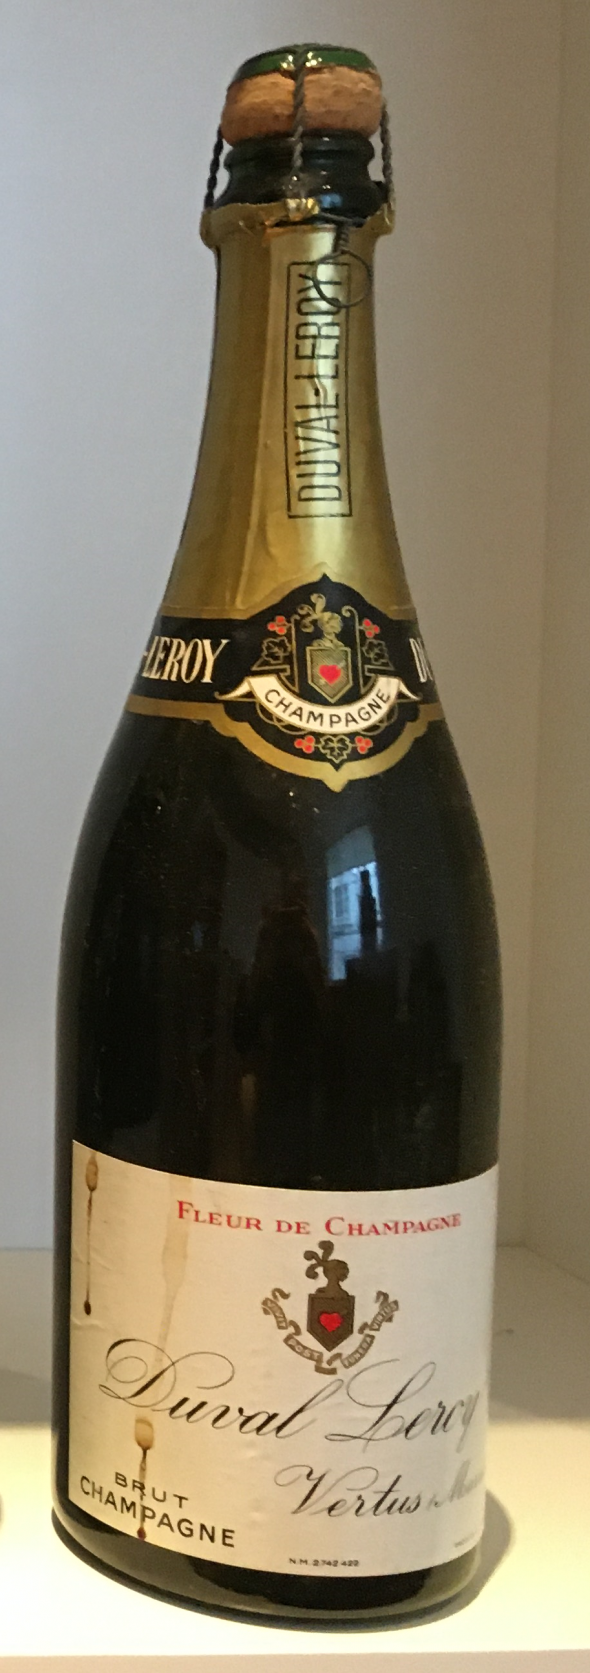 Duval Leroy, Fleur Champagne Brut, Champagne, France, AOC